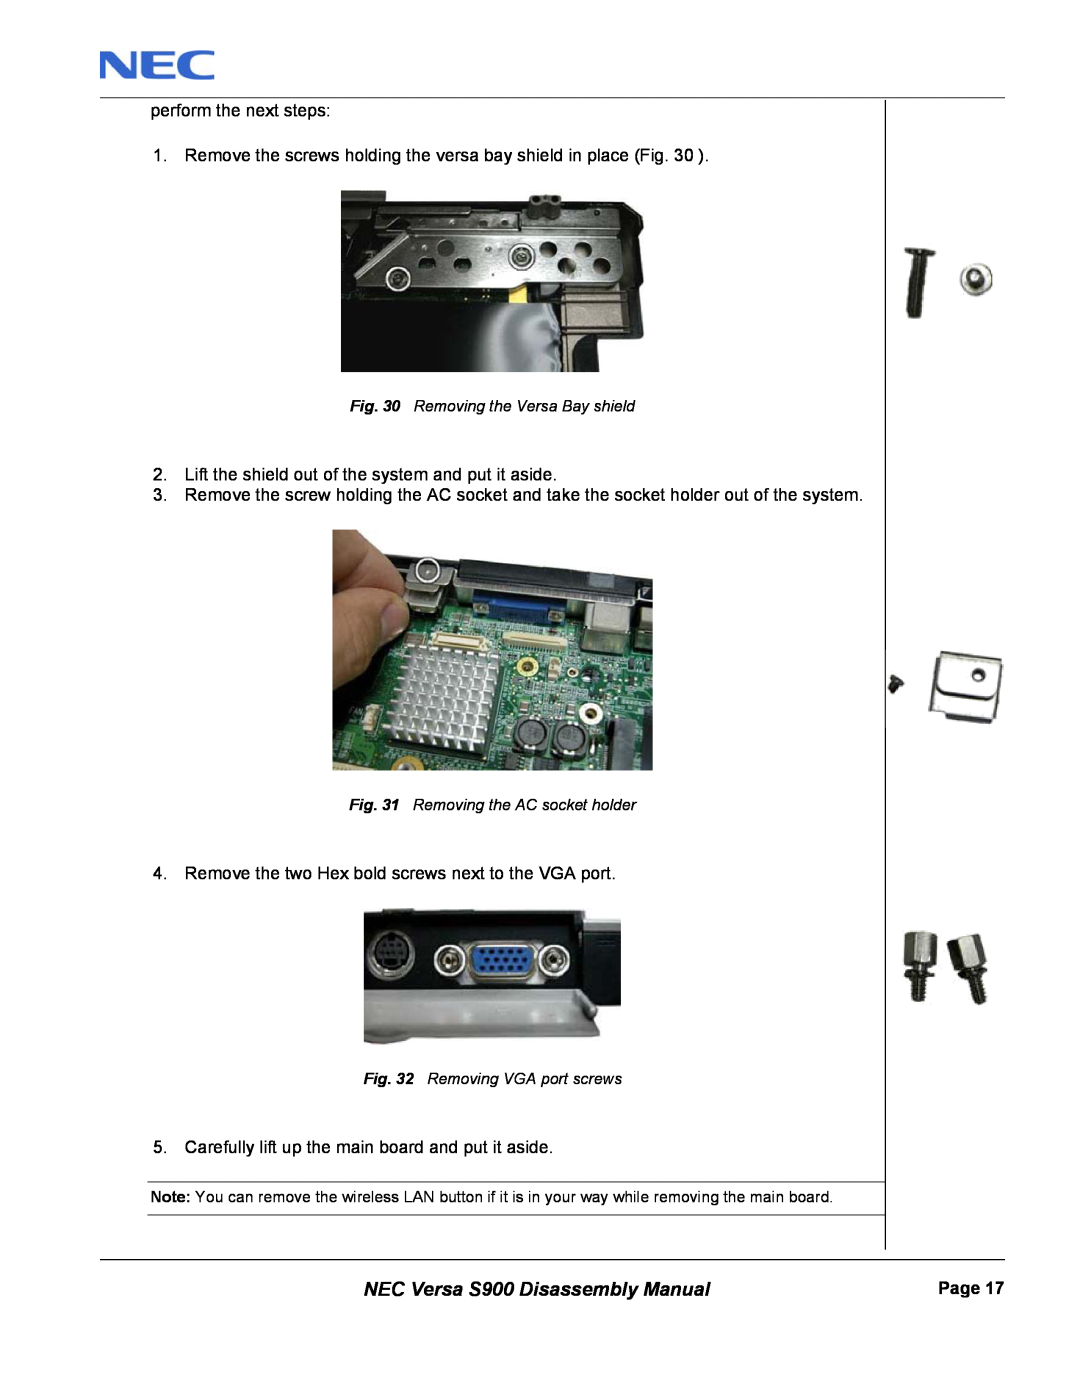 NEC manual NEC Versa S900 Disassembly Manual, perform the next steps 